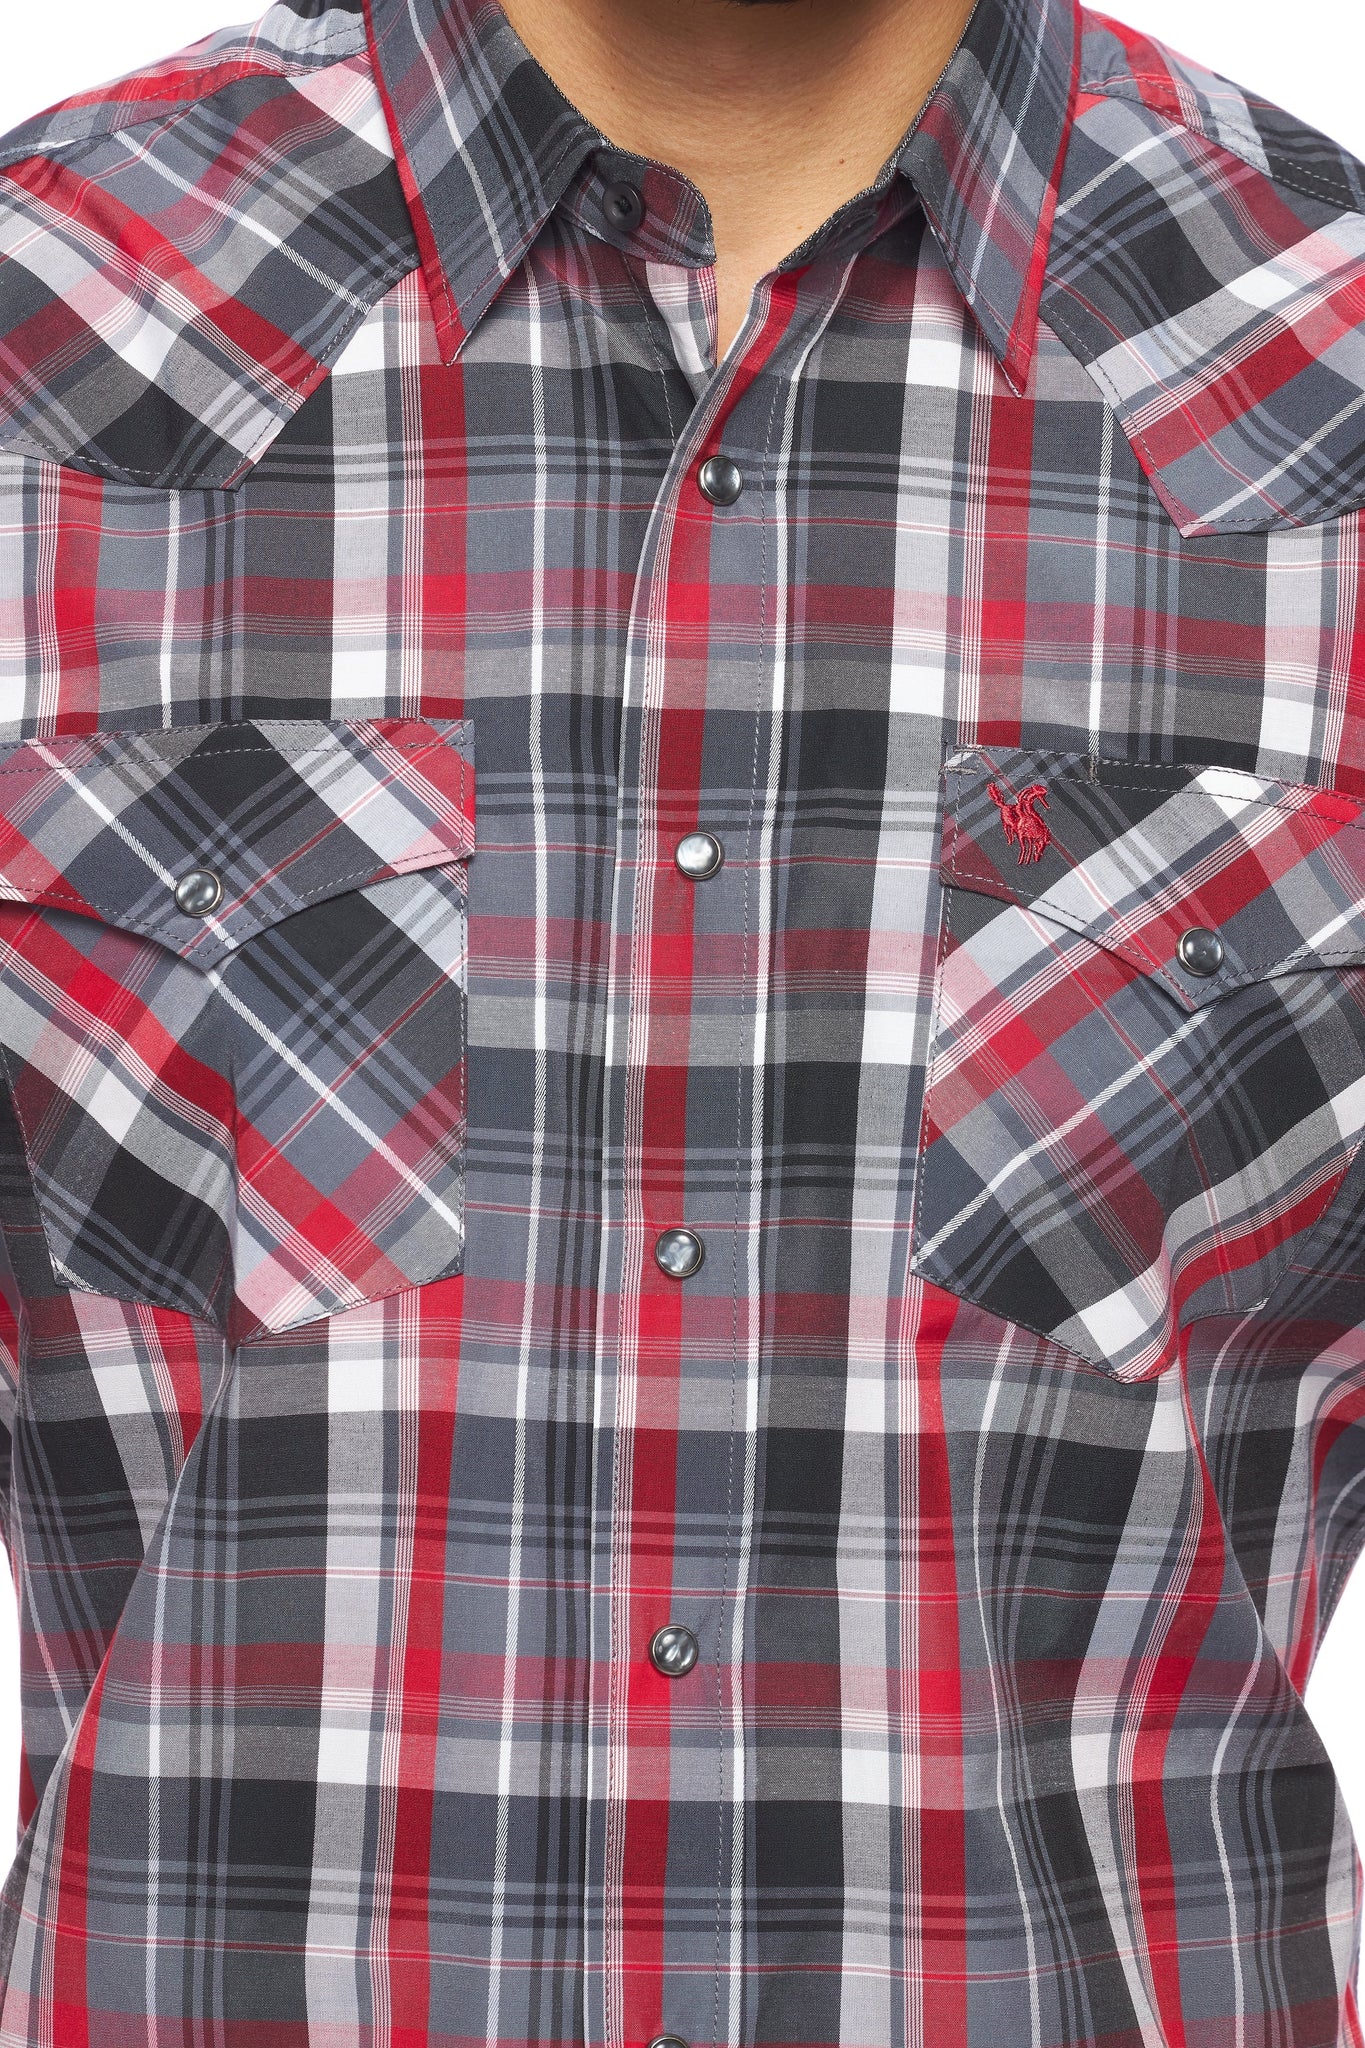 Men's Western Short Sleeve Pearl Snaps Plaid Shirt-PS400S-402